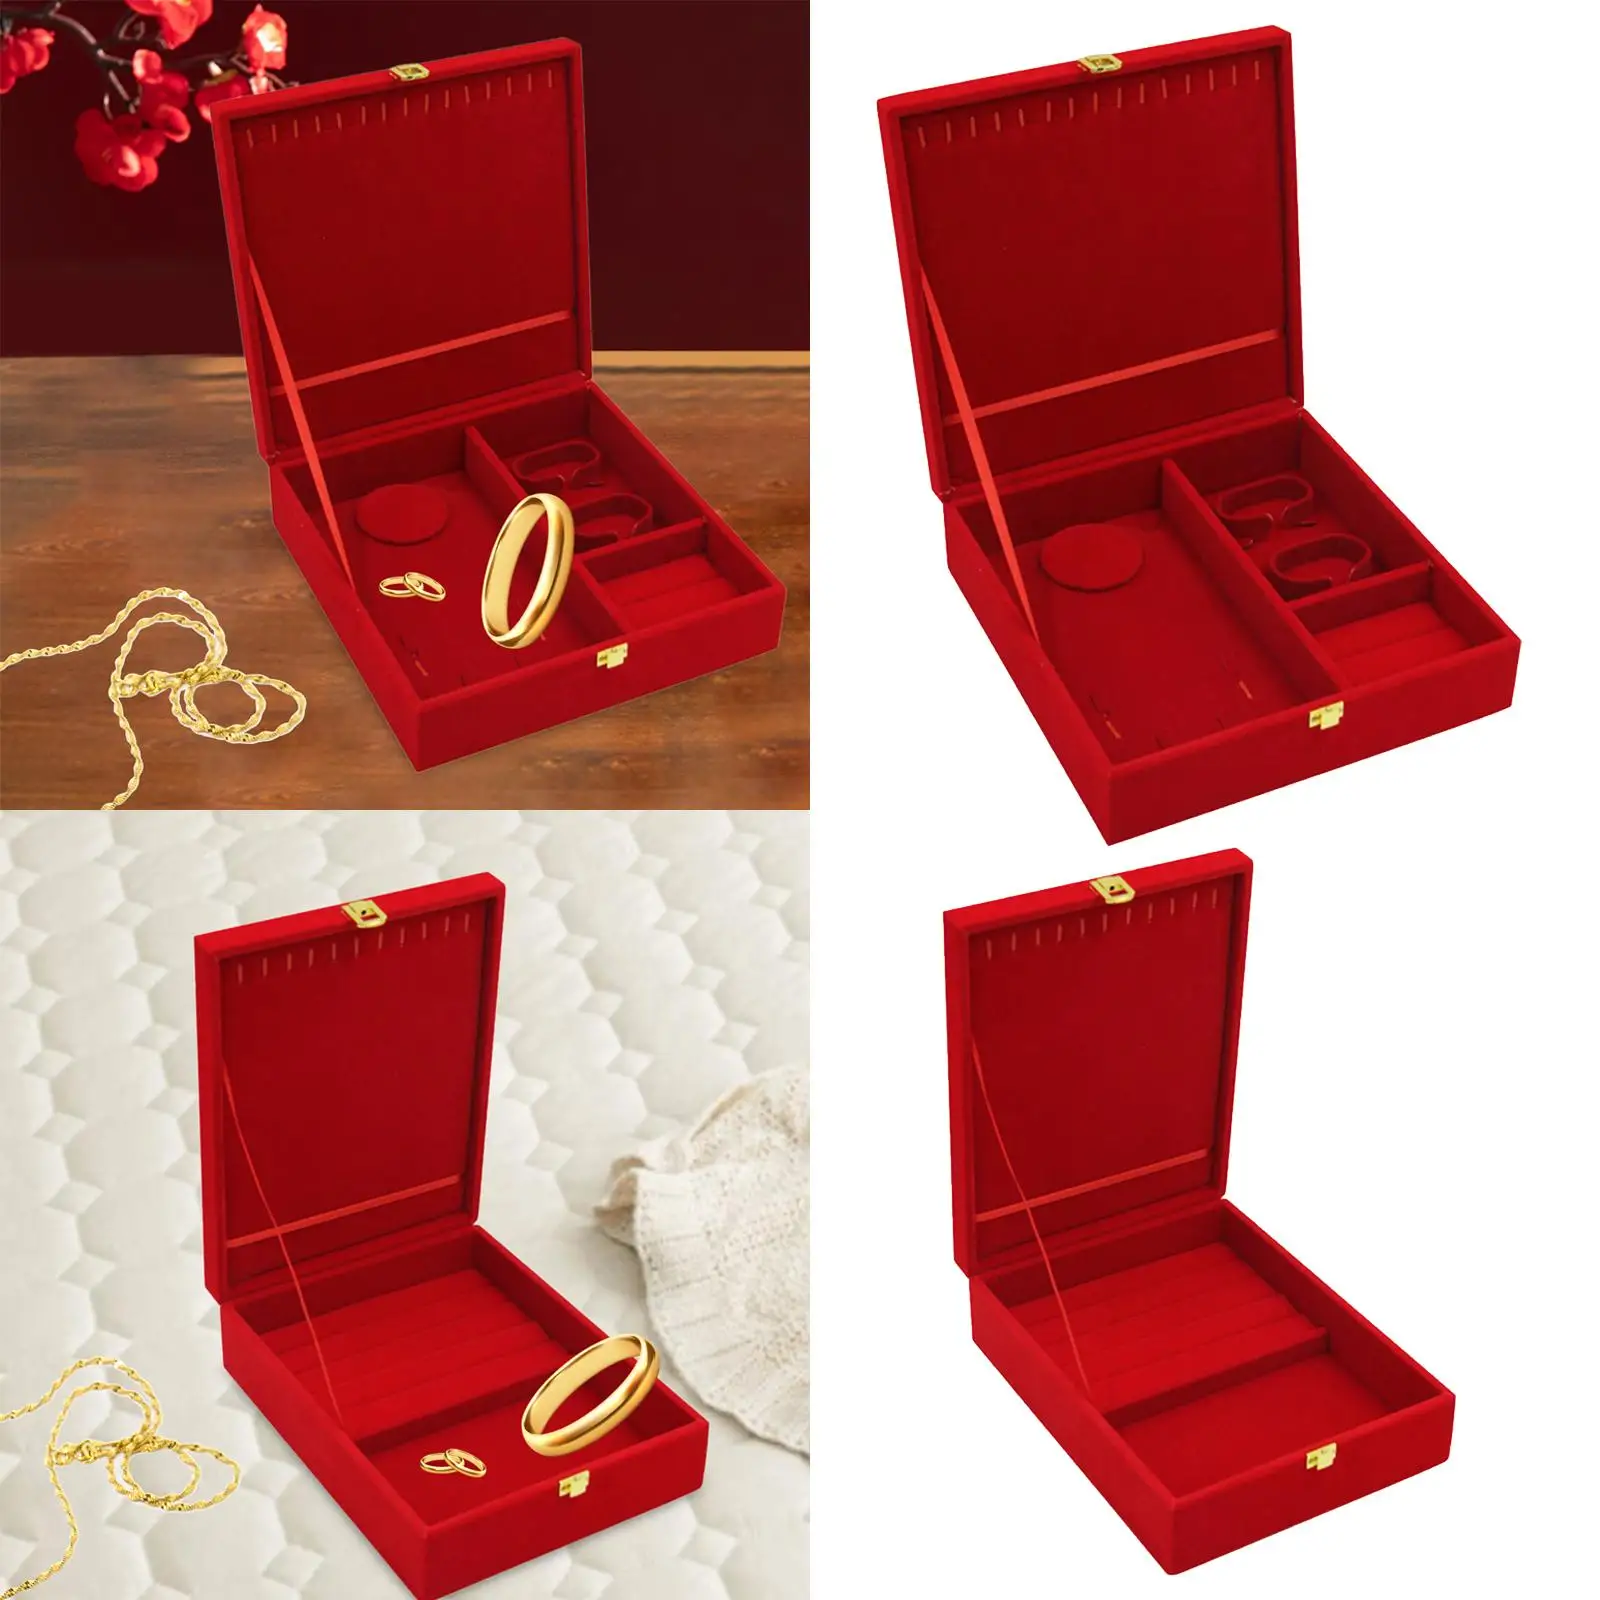 Wedding Jewelry Set Gift Box Red Velvet Jewelry Box Wedding Necklace Earring Ring Gift Box Jewelry Display Box for Weddings